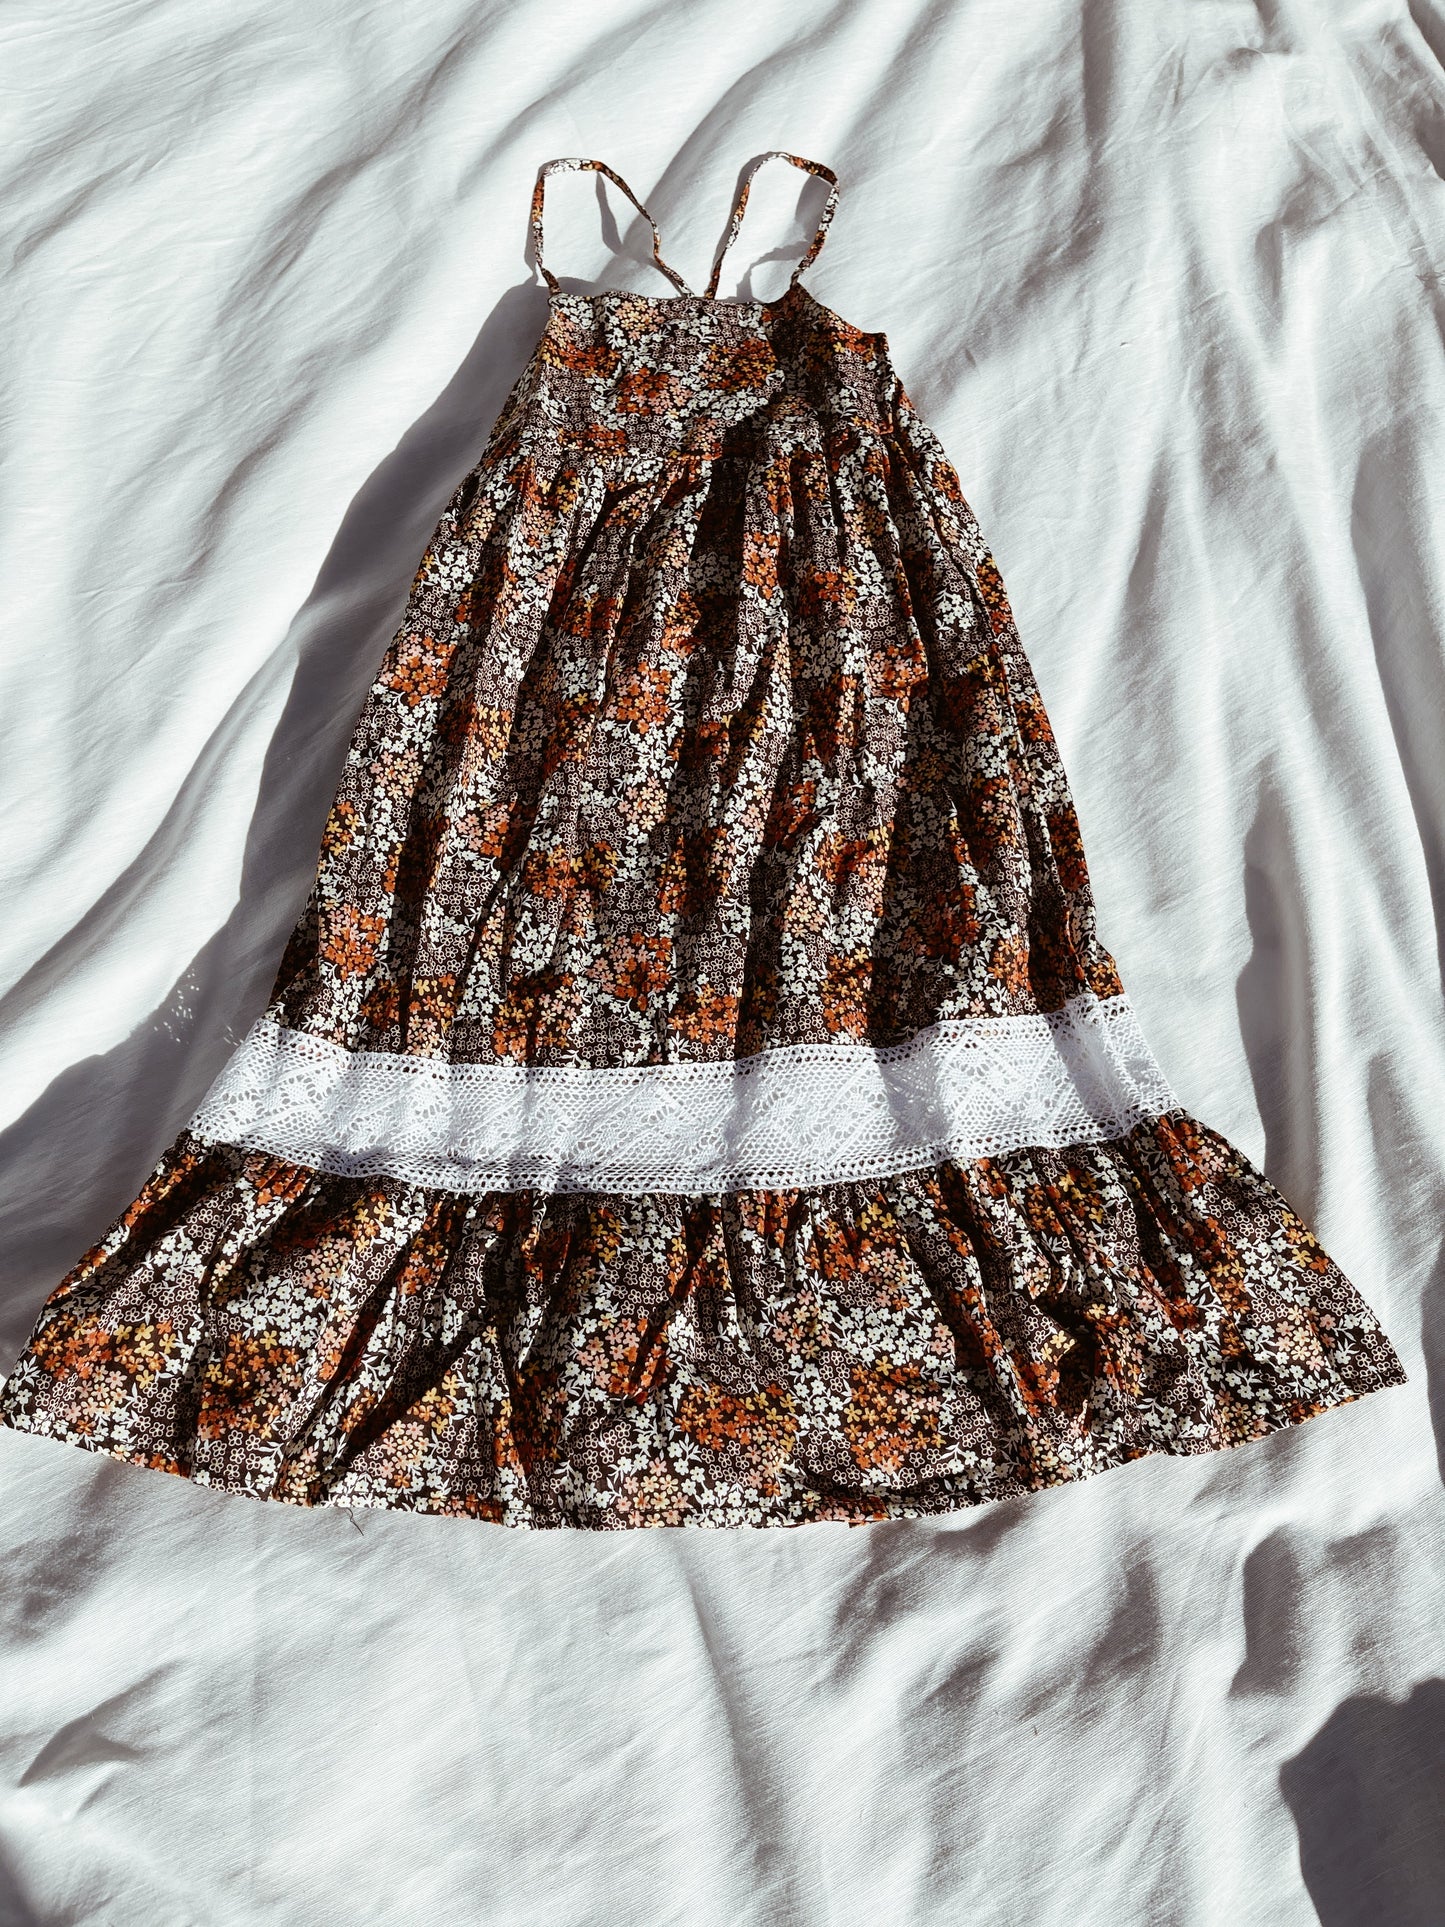 iluca the label | Aubree Vintage Crochet Smock - Girls Dress for Babies to Tweens. - HANDMADE + ORGANIC COTTON